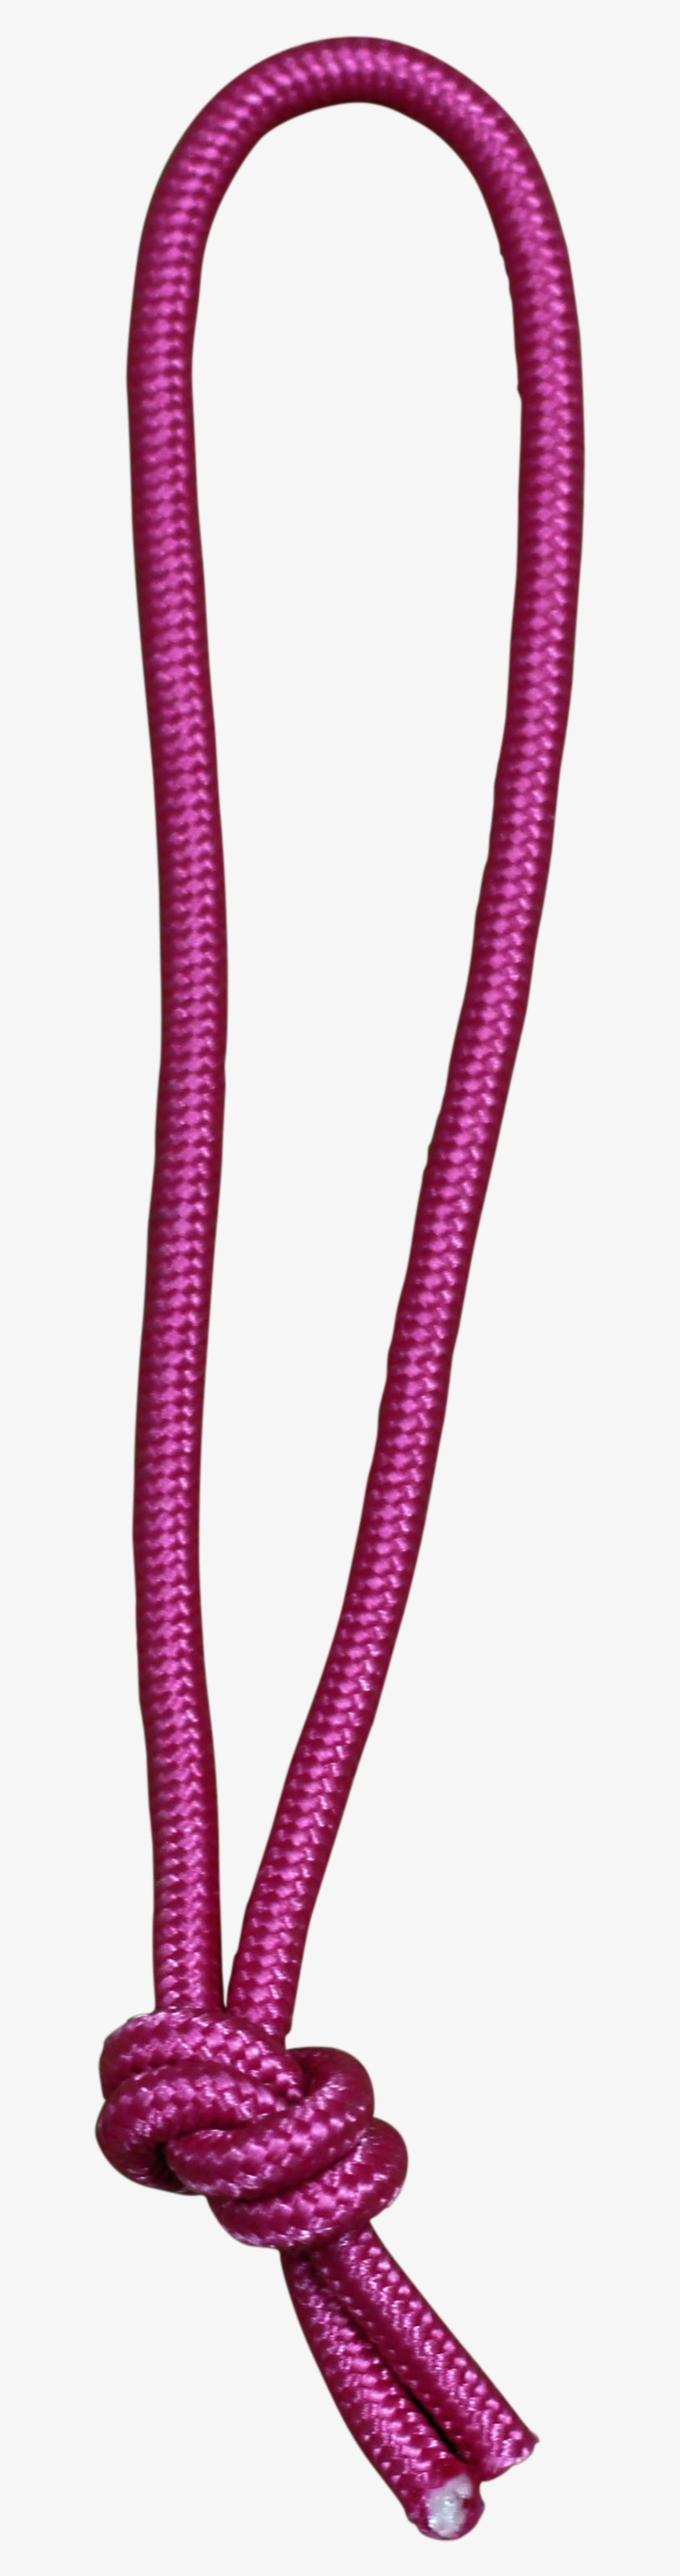 String Rope Png - Leash, transparent png #238876